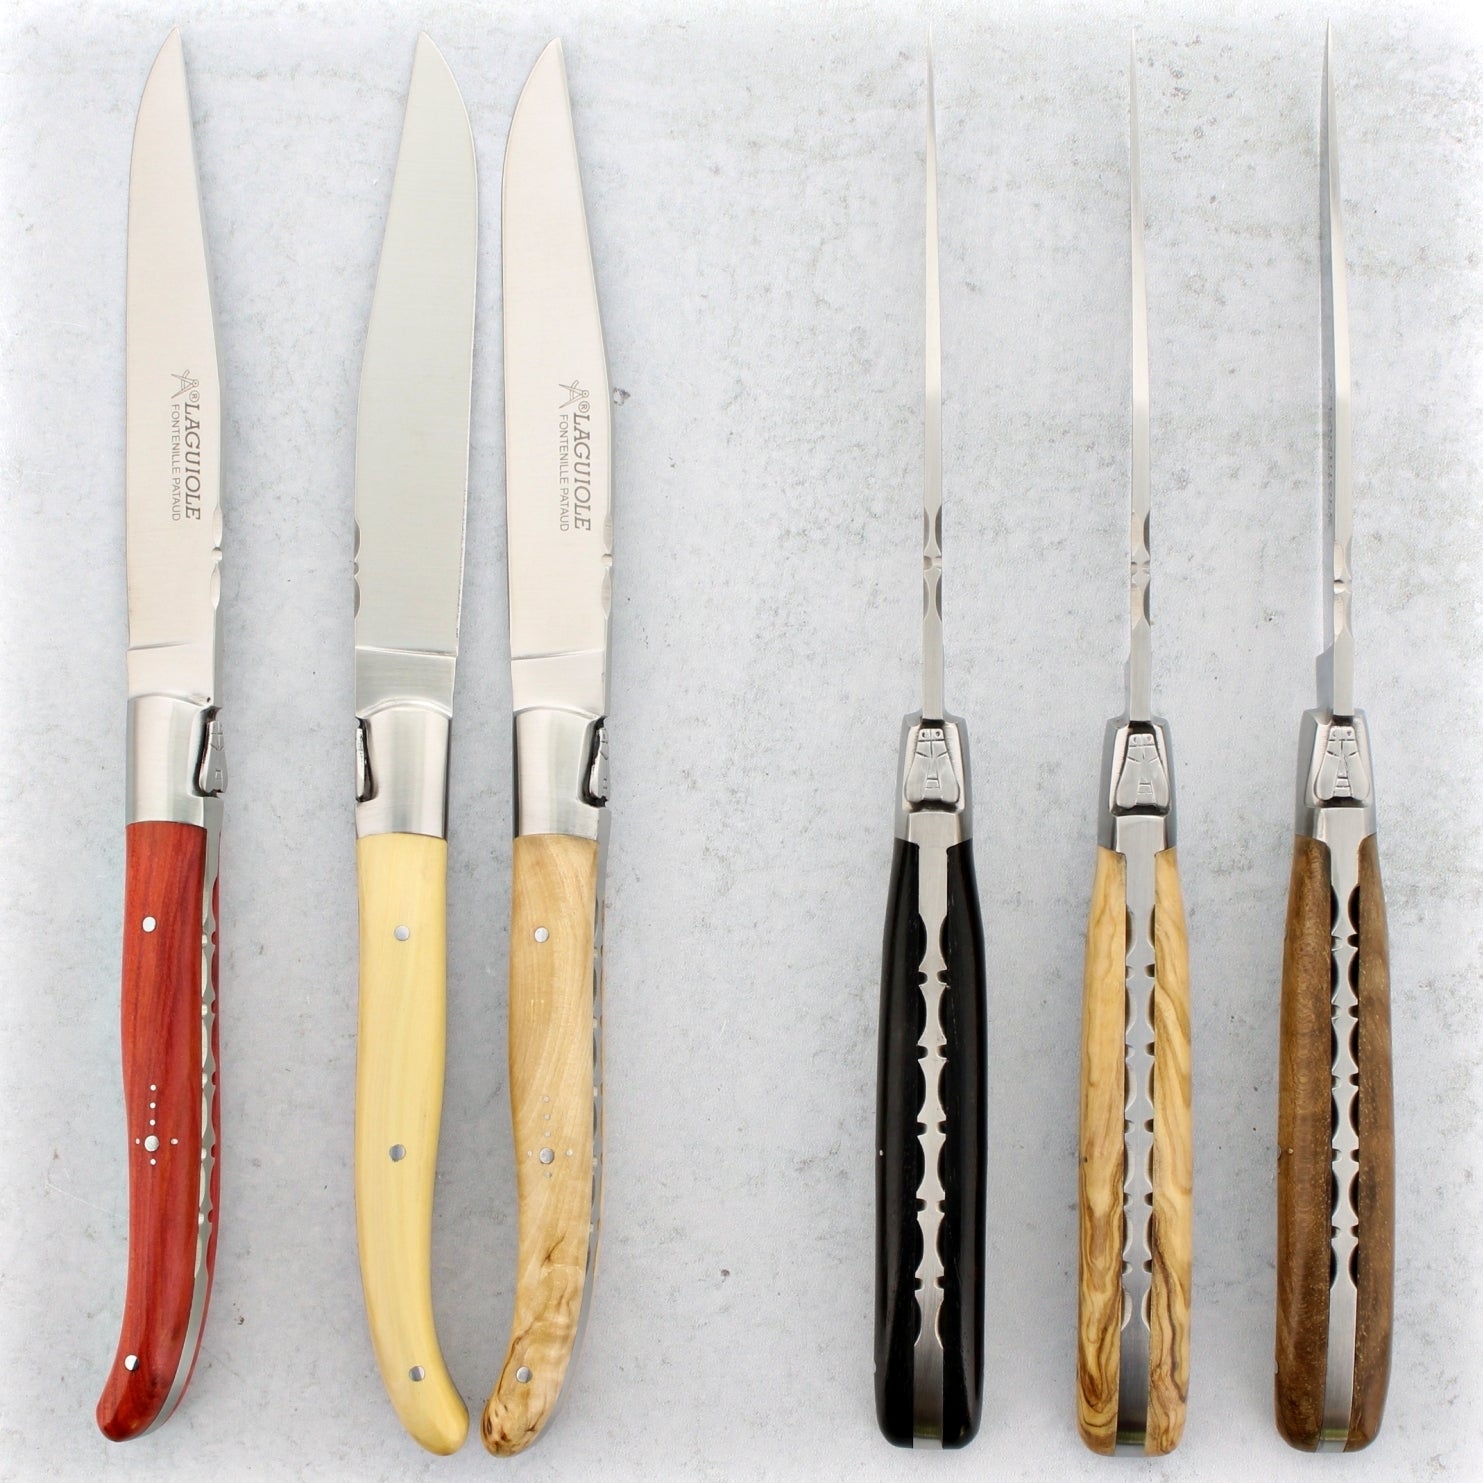 Laguiole Tradition 6-Piece Steak Knife Set - Dark Wood Handle